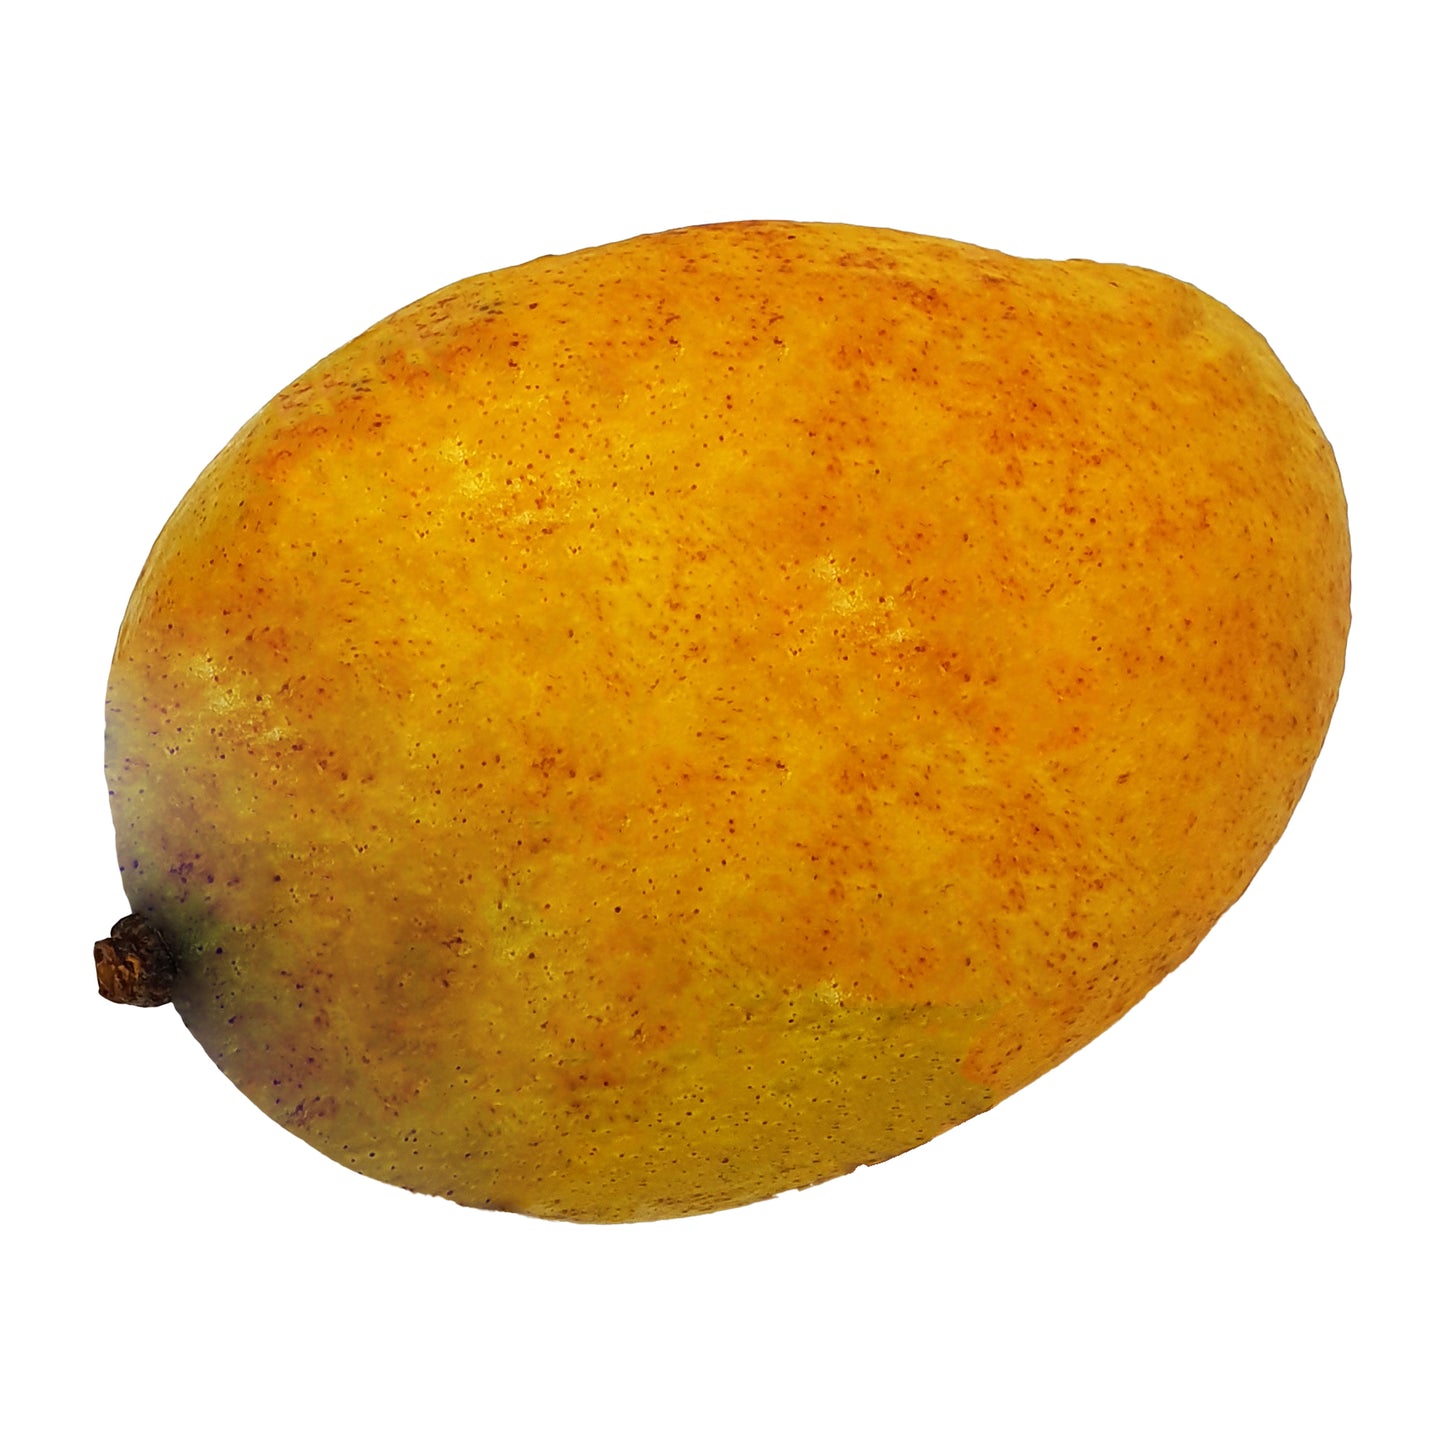 Alphonso Mango (1kg)